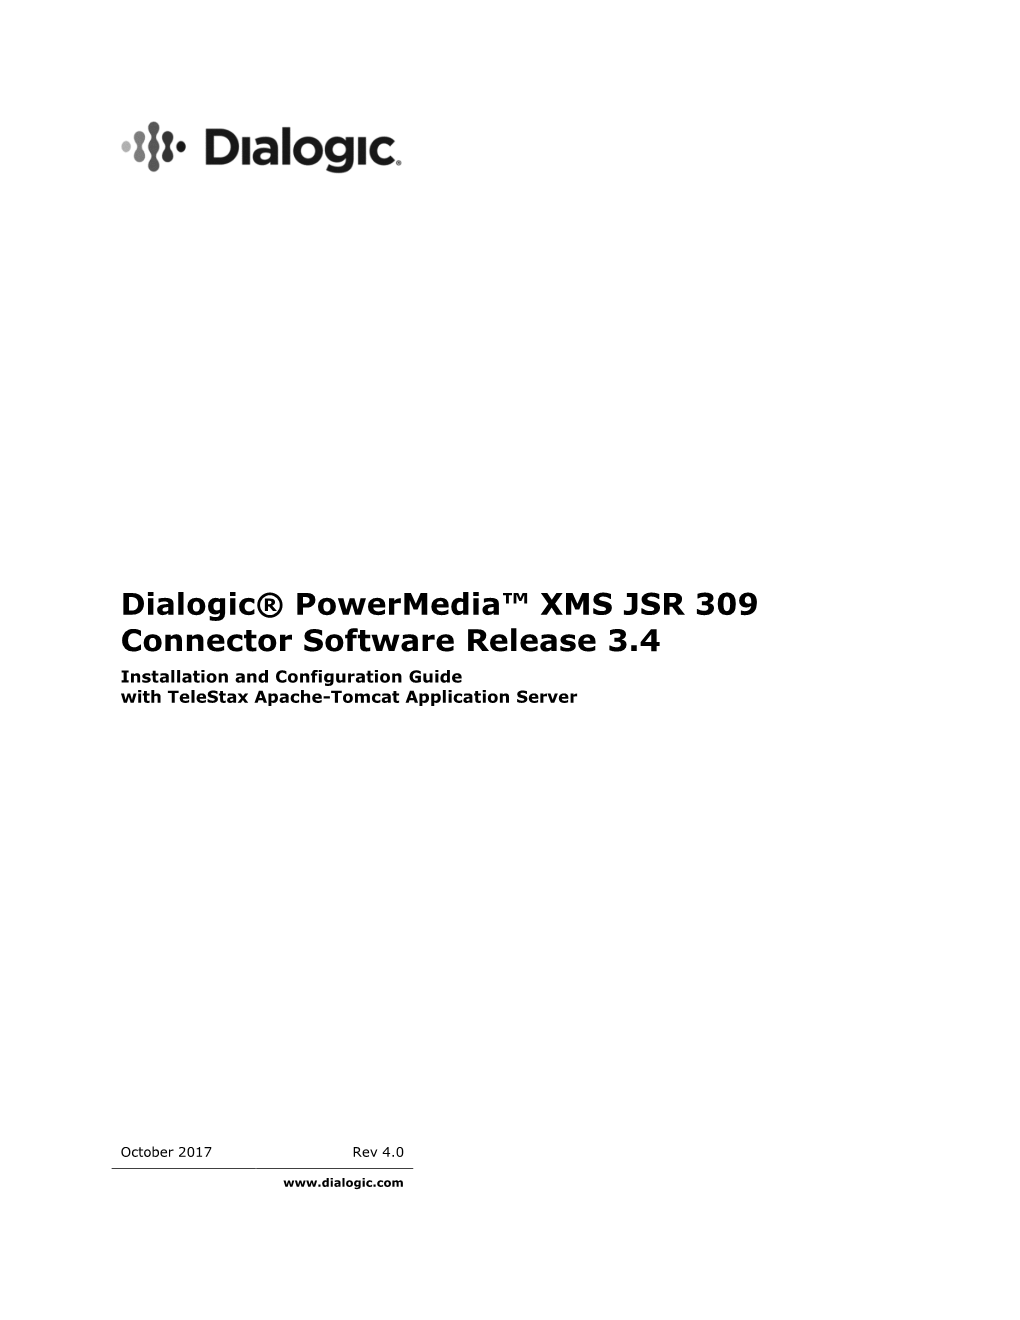 Dialogic® Powermedia™ XMS JSR 309 Connector Software Installation